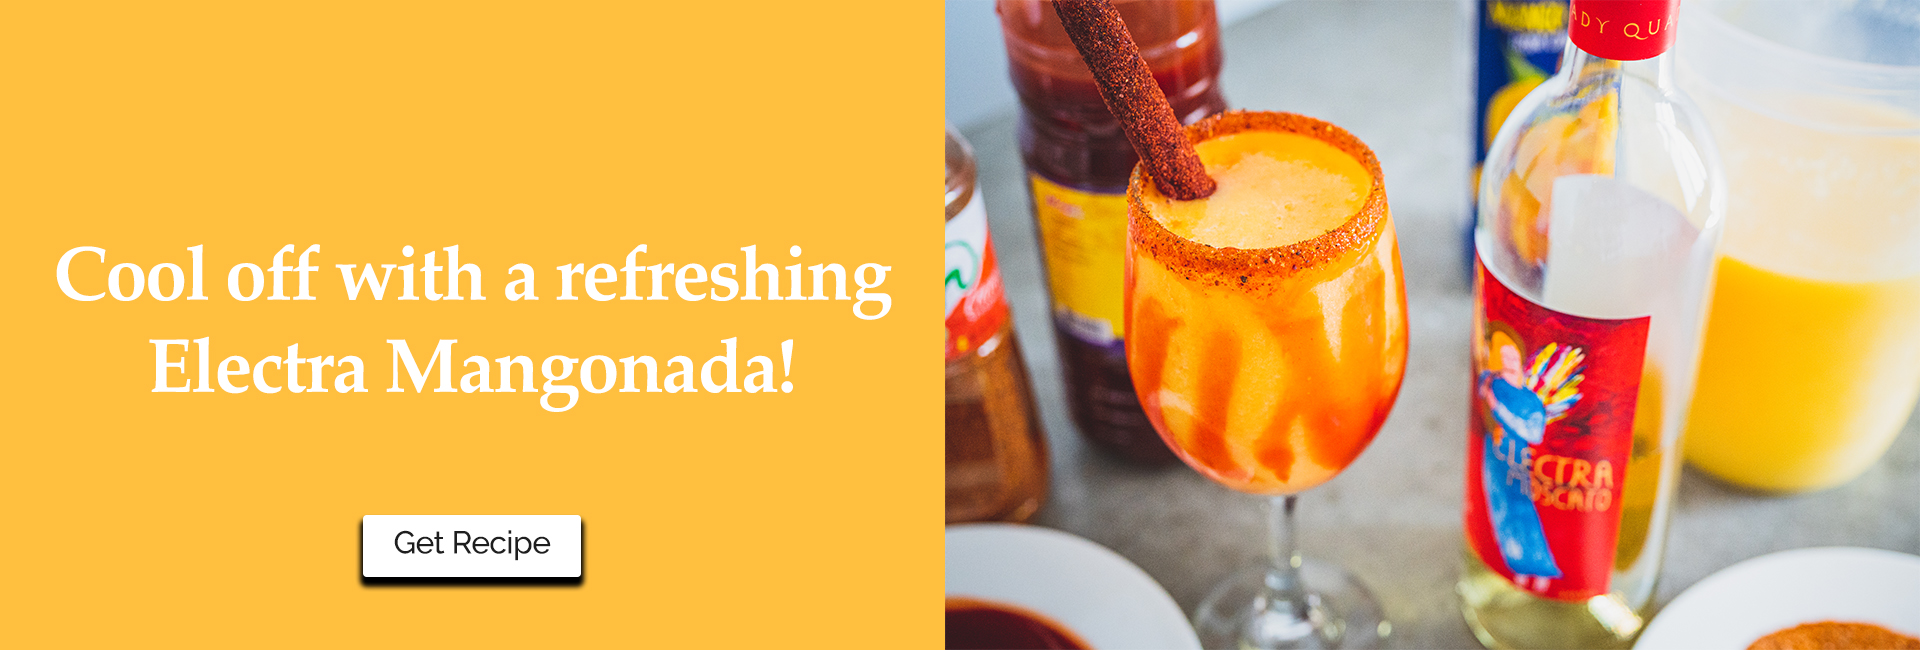 Cool off with a refreshing Electra Mangonada! Get Recipe Photo of mangonada